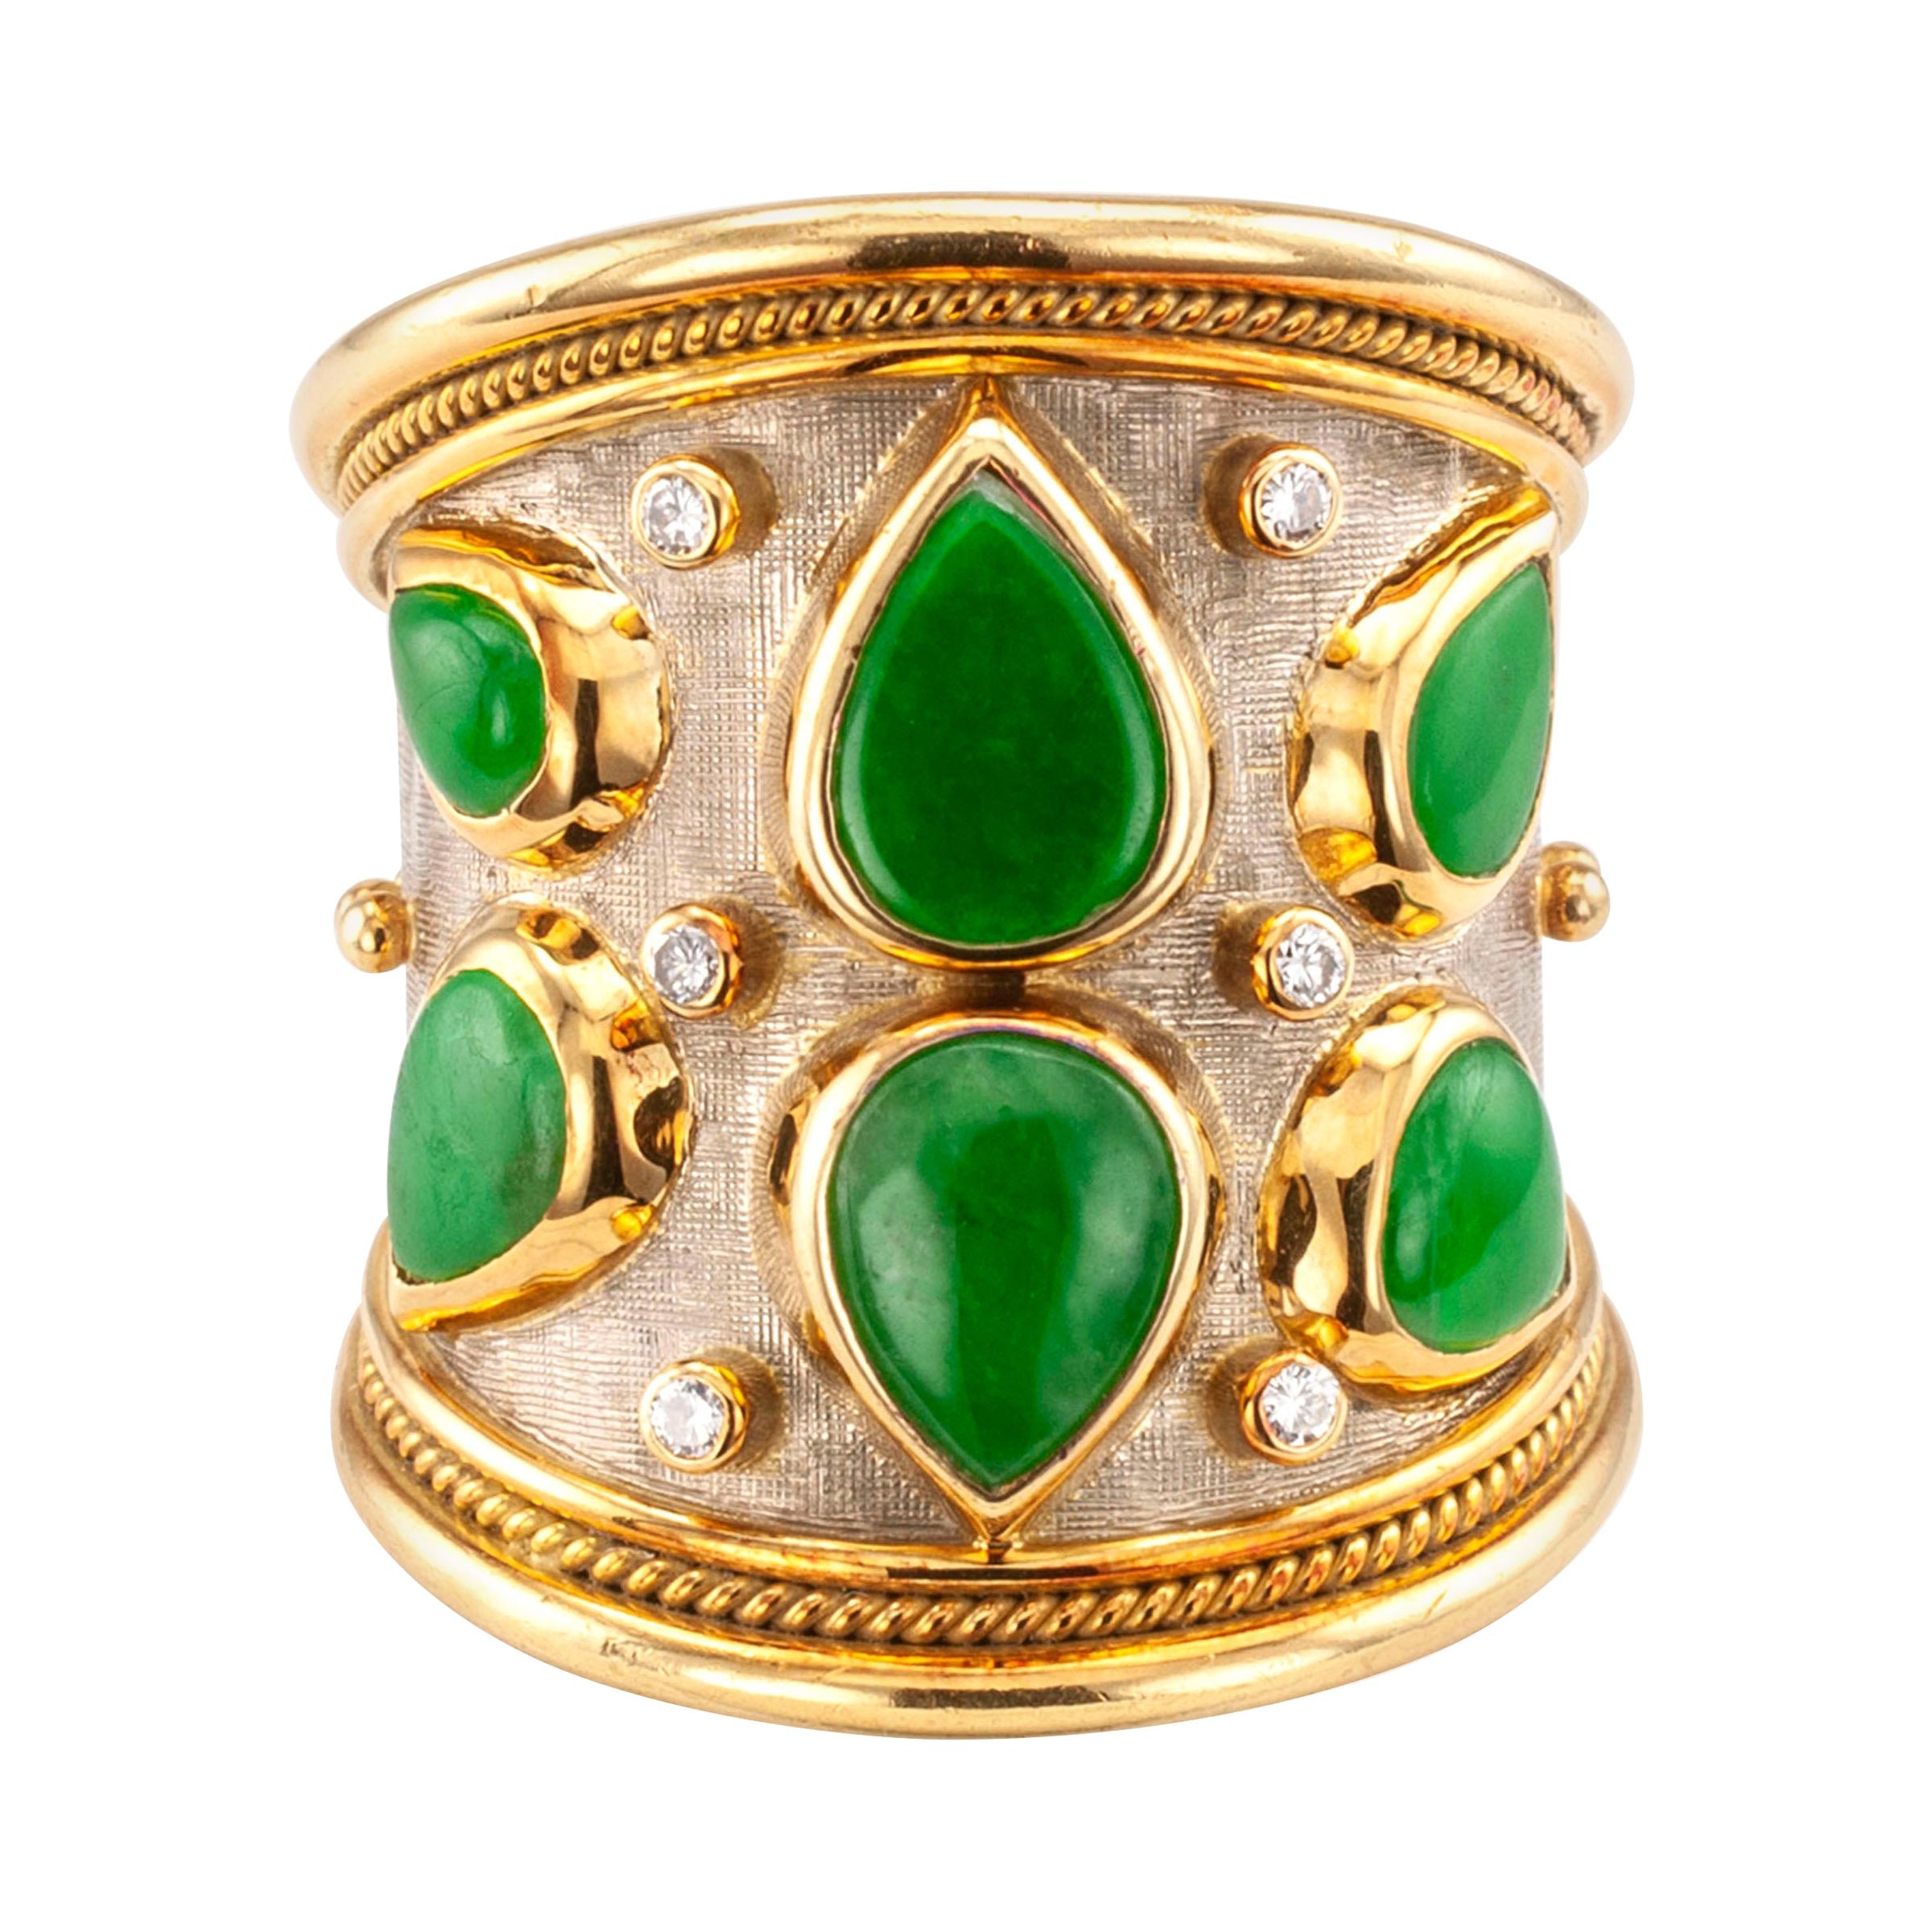 Elizabeth Gage Diamant Jadeit Gold Zigarrenband Ring